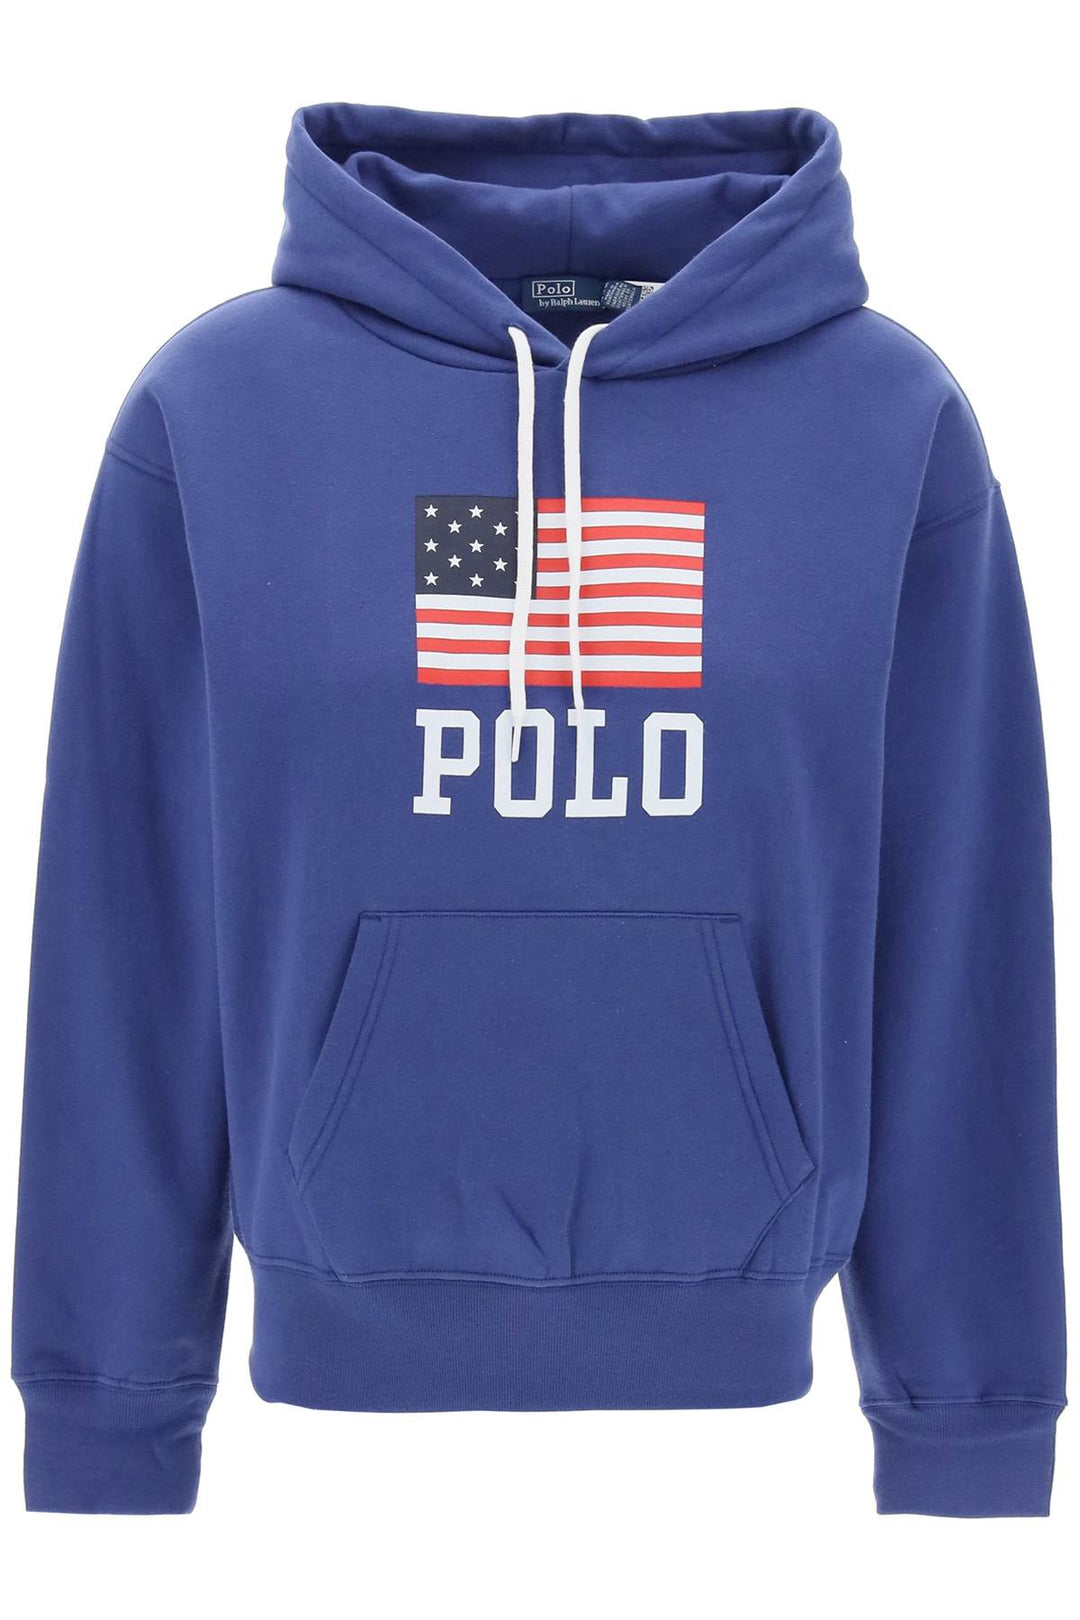 Polo Ralph Lauren Hooded Sweatshirt With Flag Print   Blu